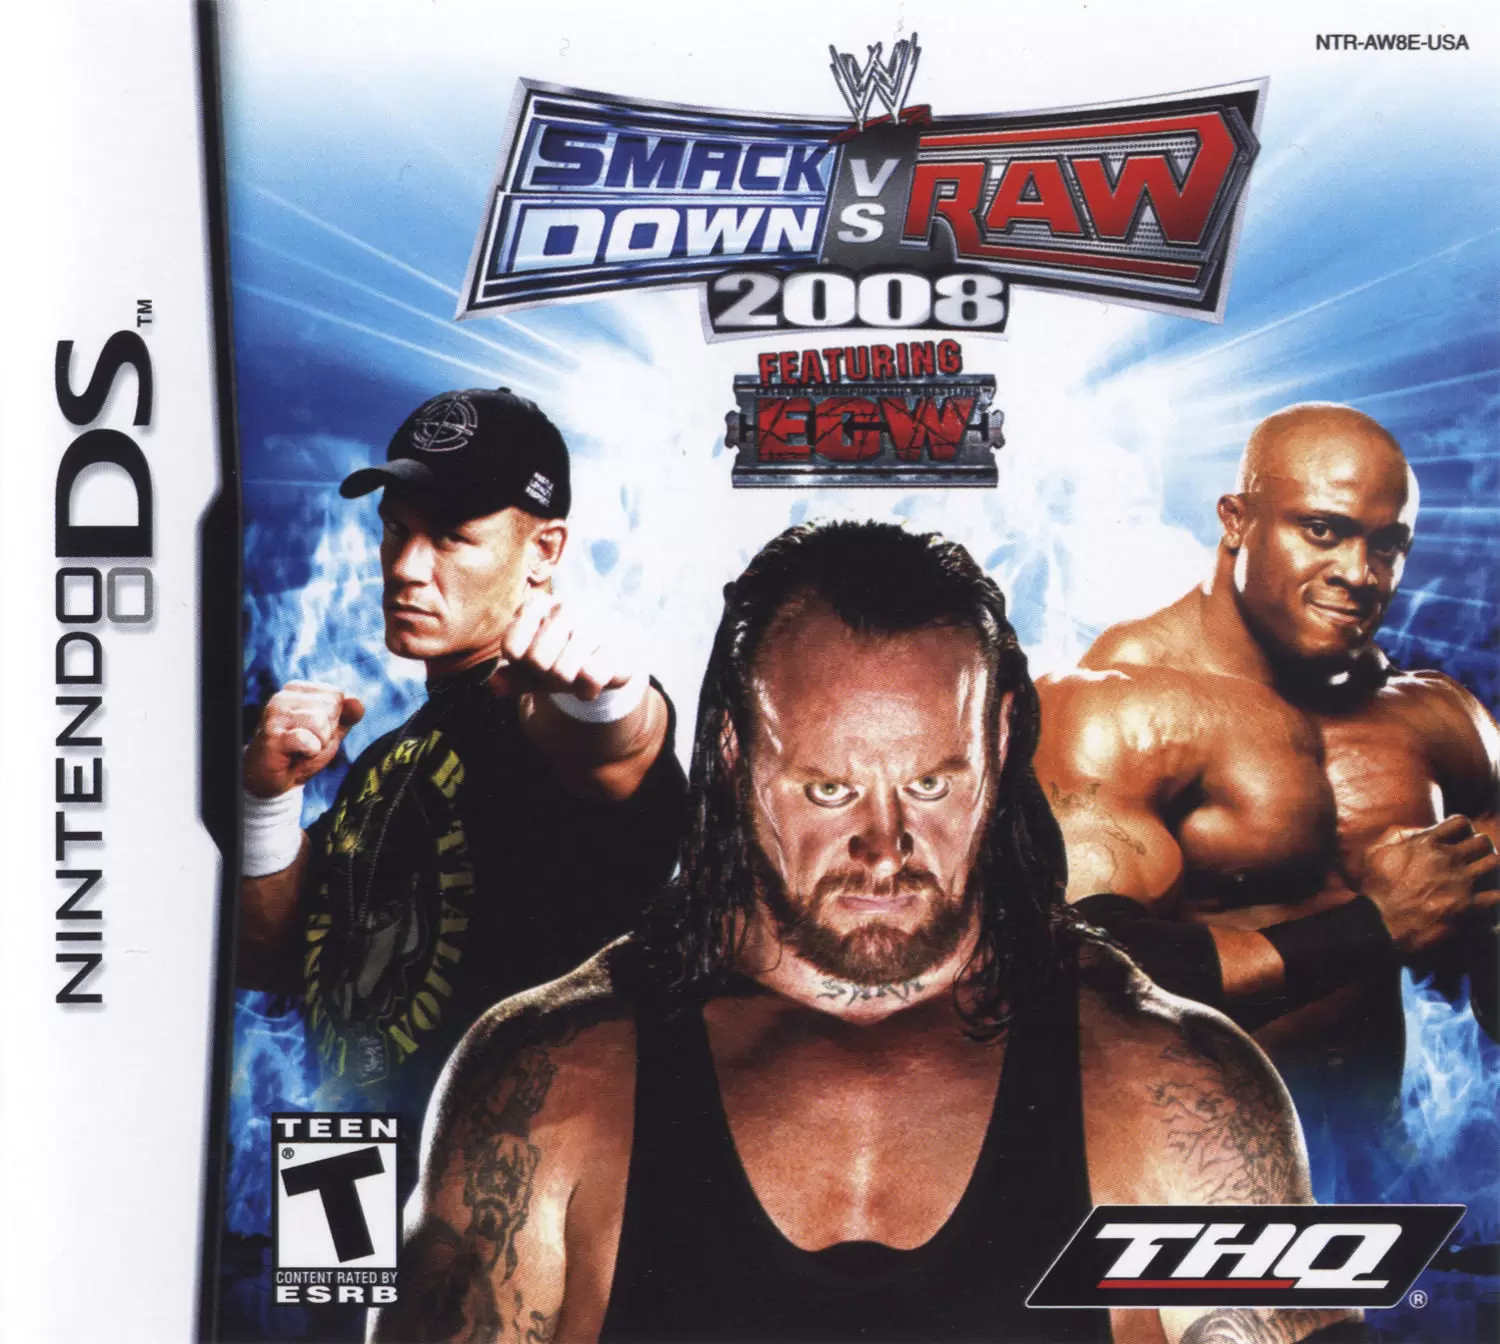 Nintendo DS Games - WWE SmackDown vs. Raw 2008